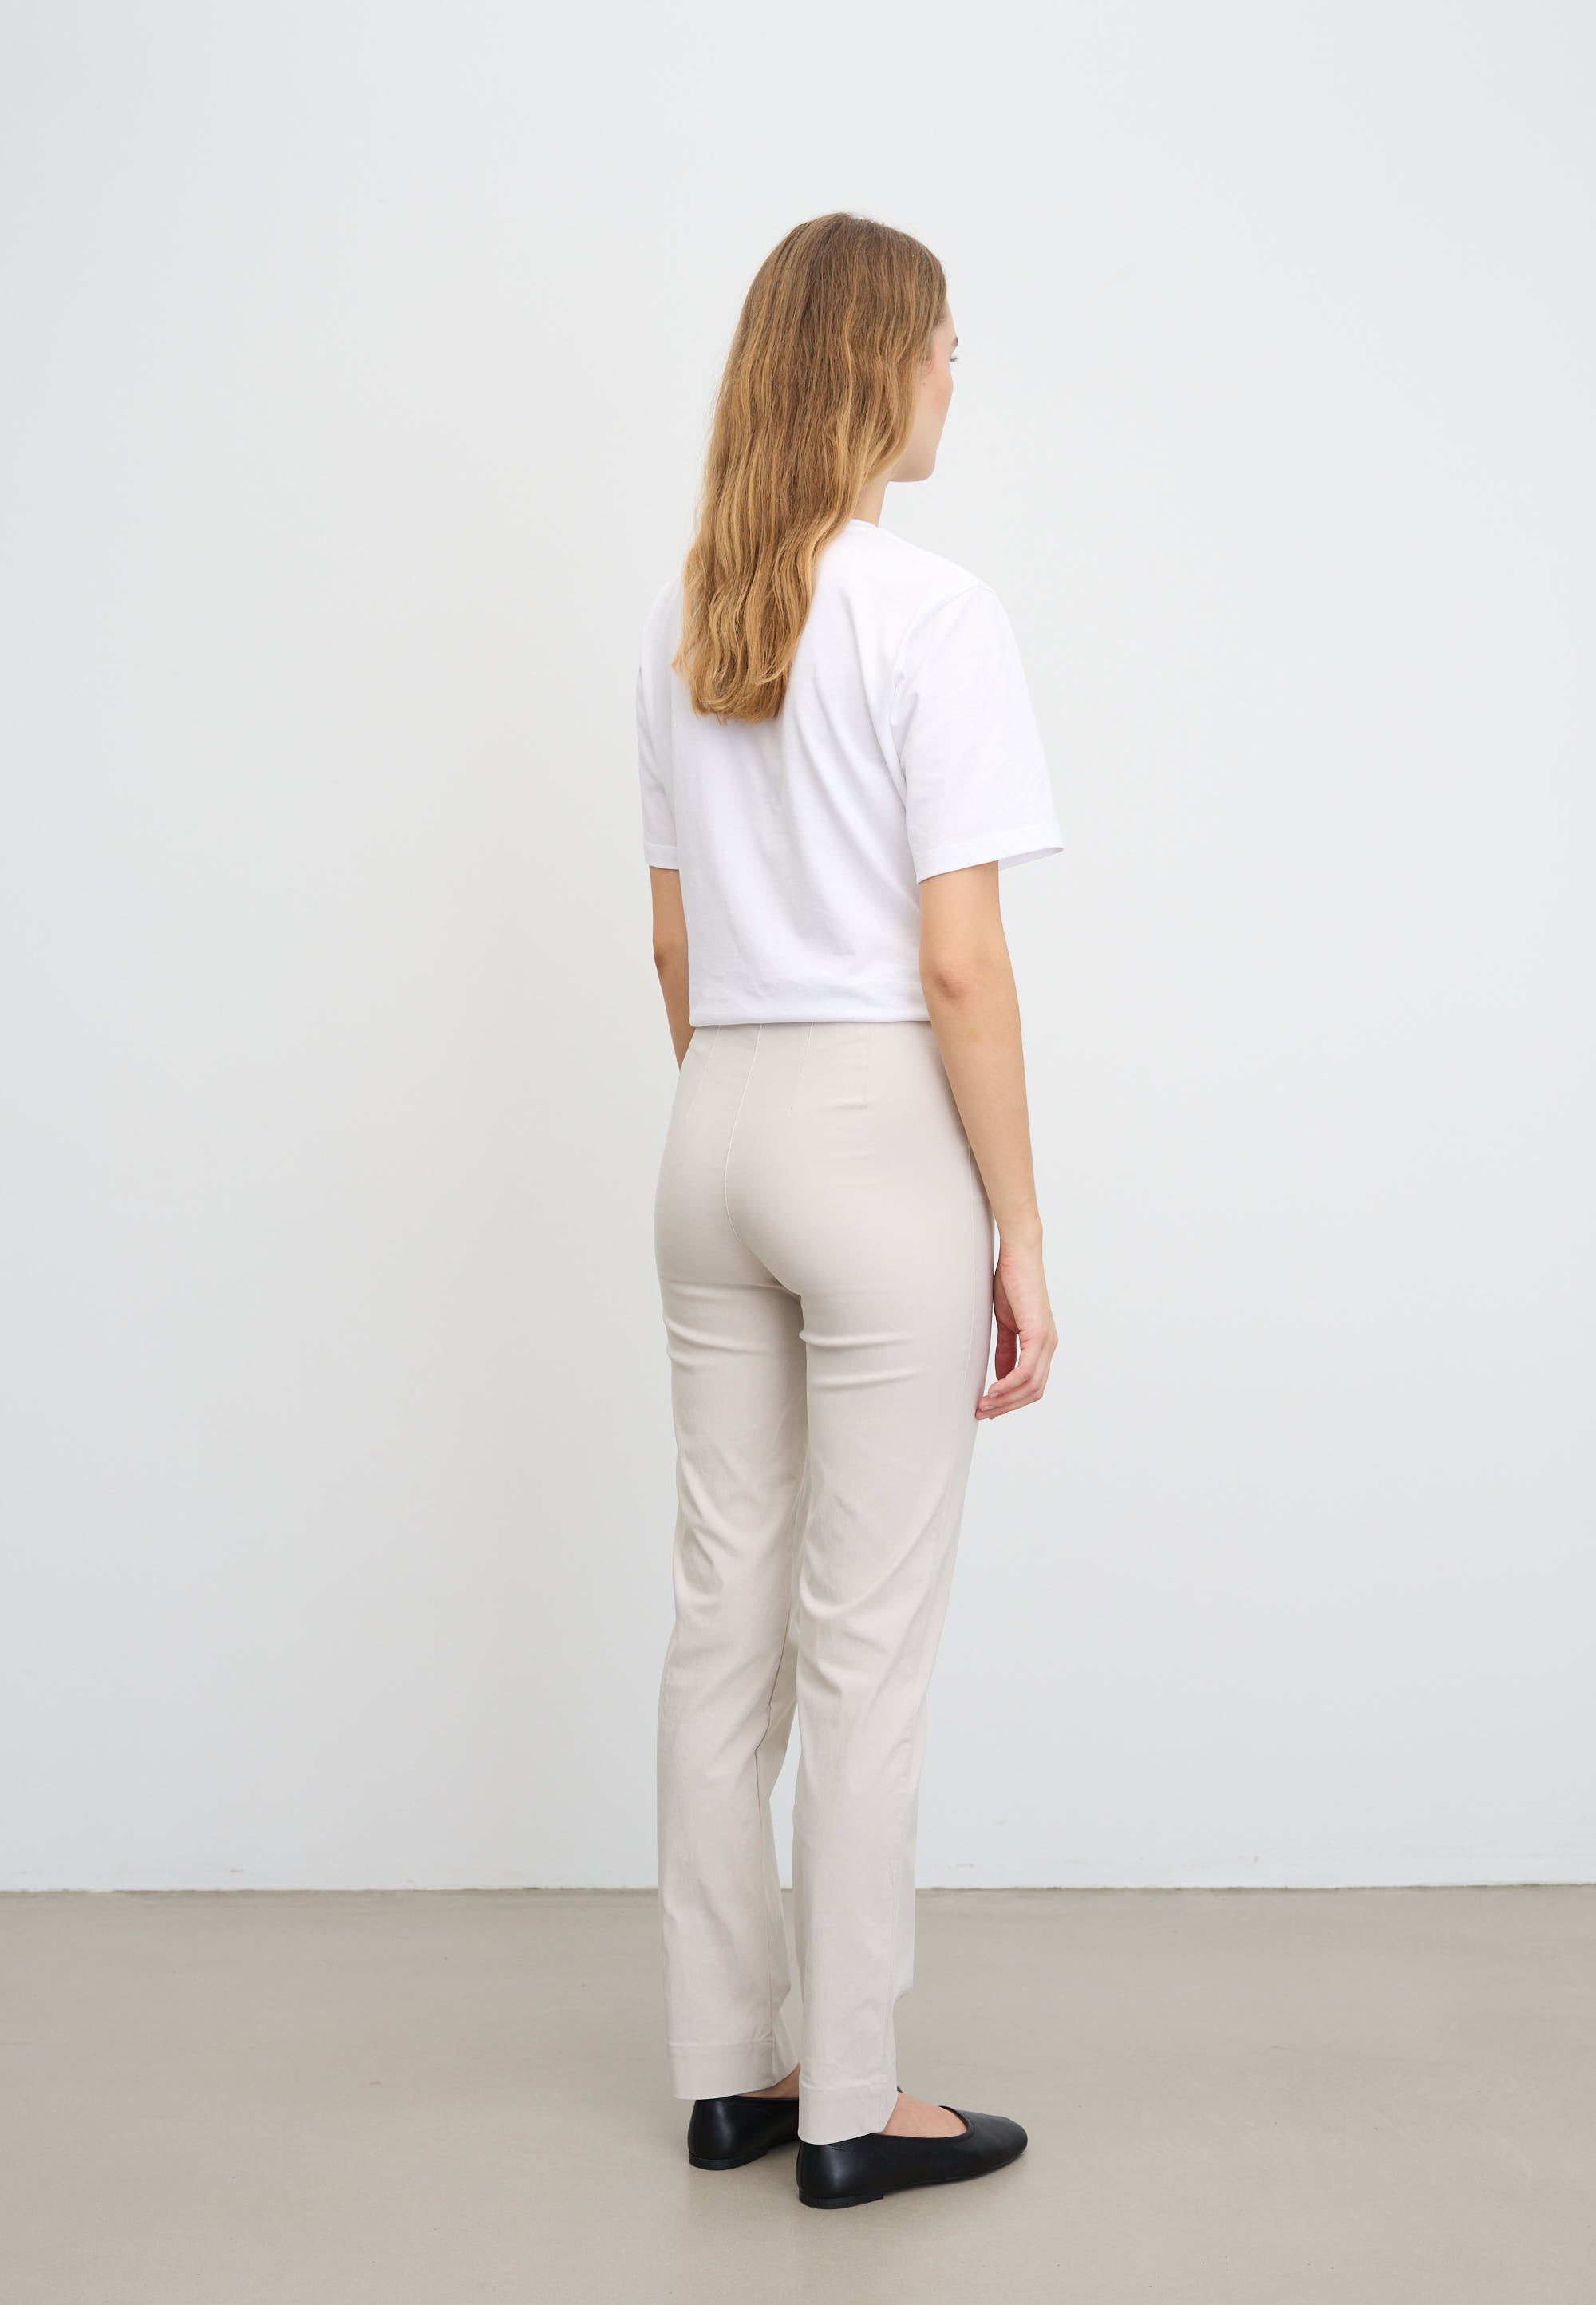 LAURIE Betty Regular - Medium Length Trousers REGULAR Grau sand